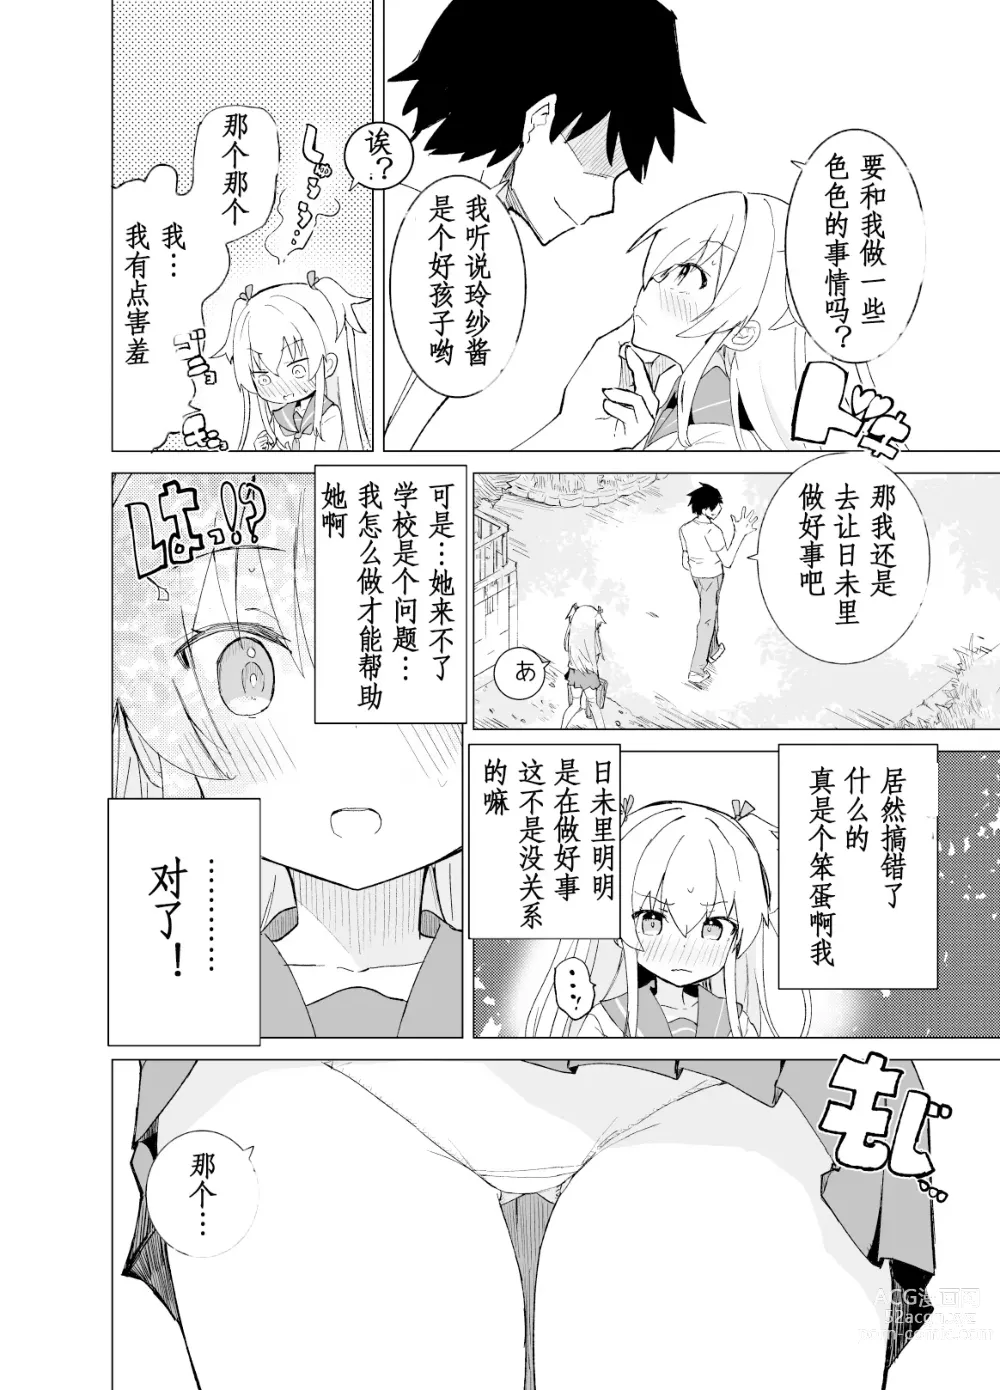 Page 15 of doujinshi S.S.S.di Sono 1